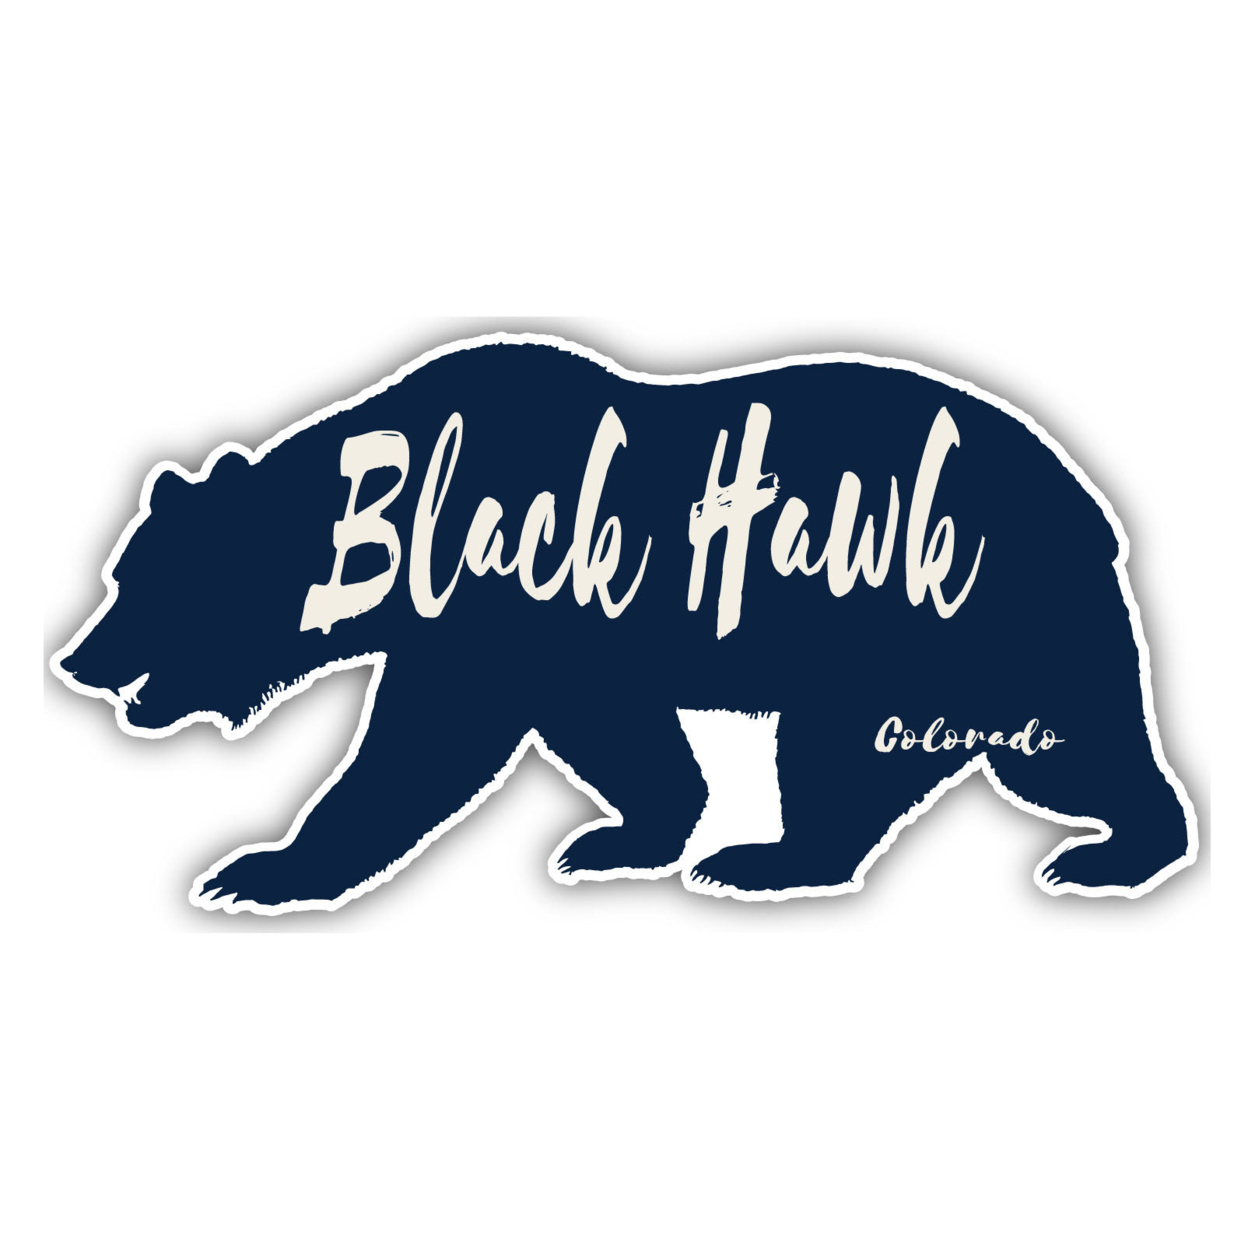 Black Hawk Colorado Souvenir Decorative Stickers (Choose Theme And Size) - 4-Pack, 12-Inch, Bear